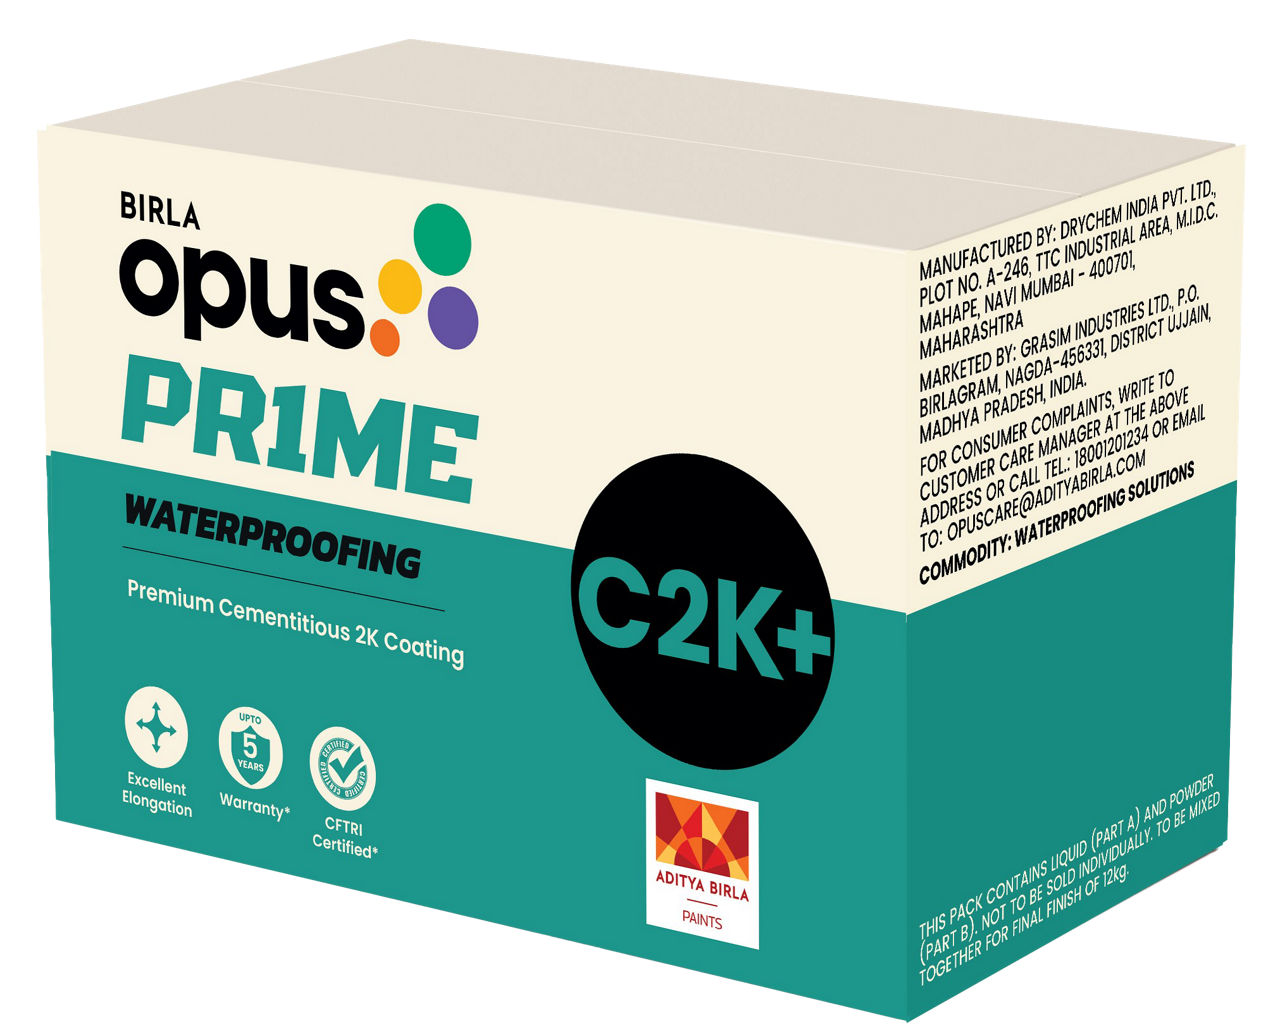 C2K+ Waterproofing Premium Cementitious 2K Coating